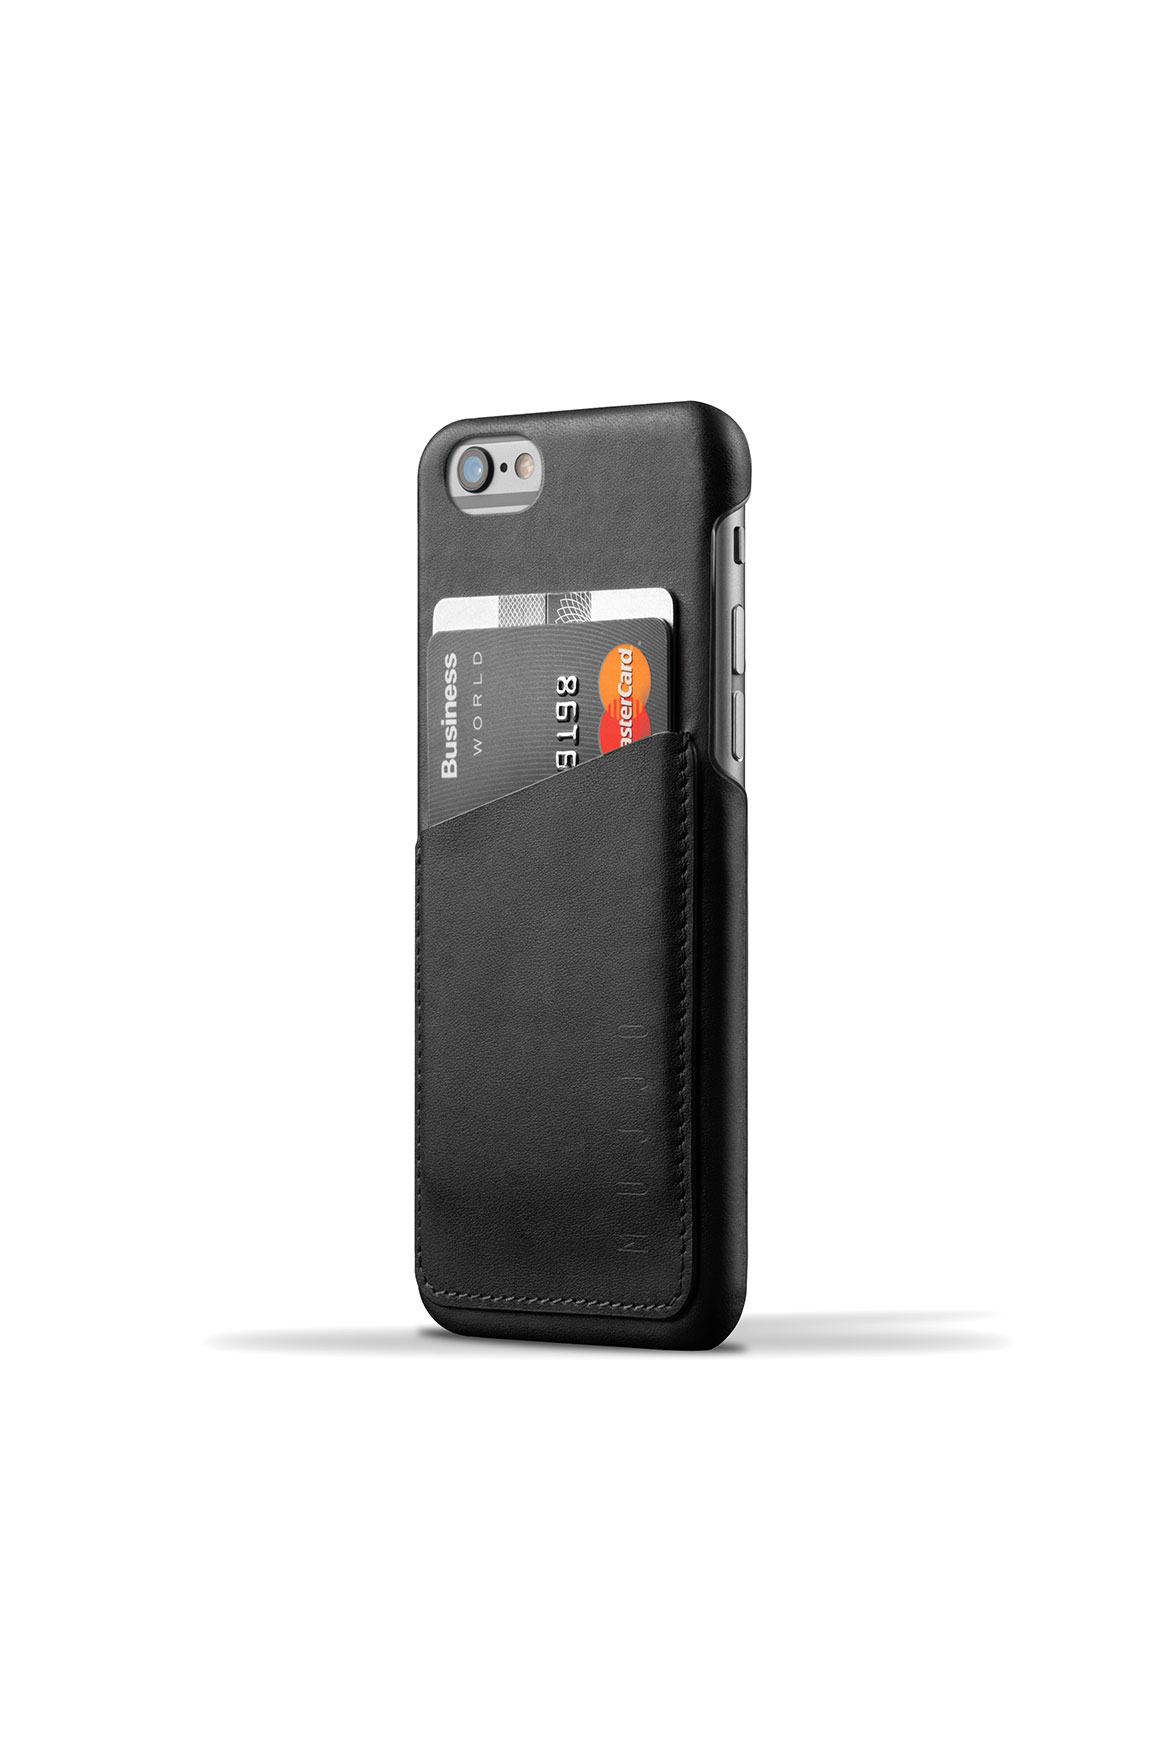 Mujjo Leather Wallet Case Apple iPhone 6 / 6s Black